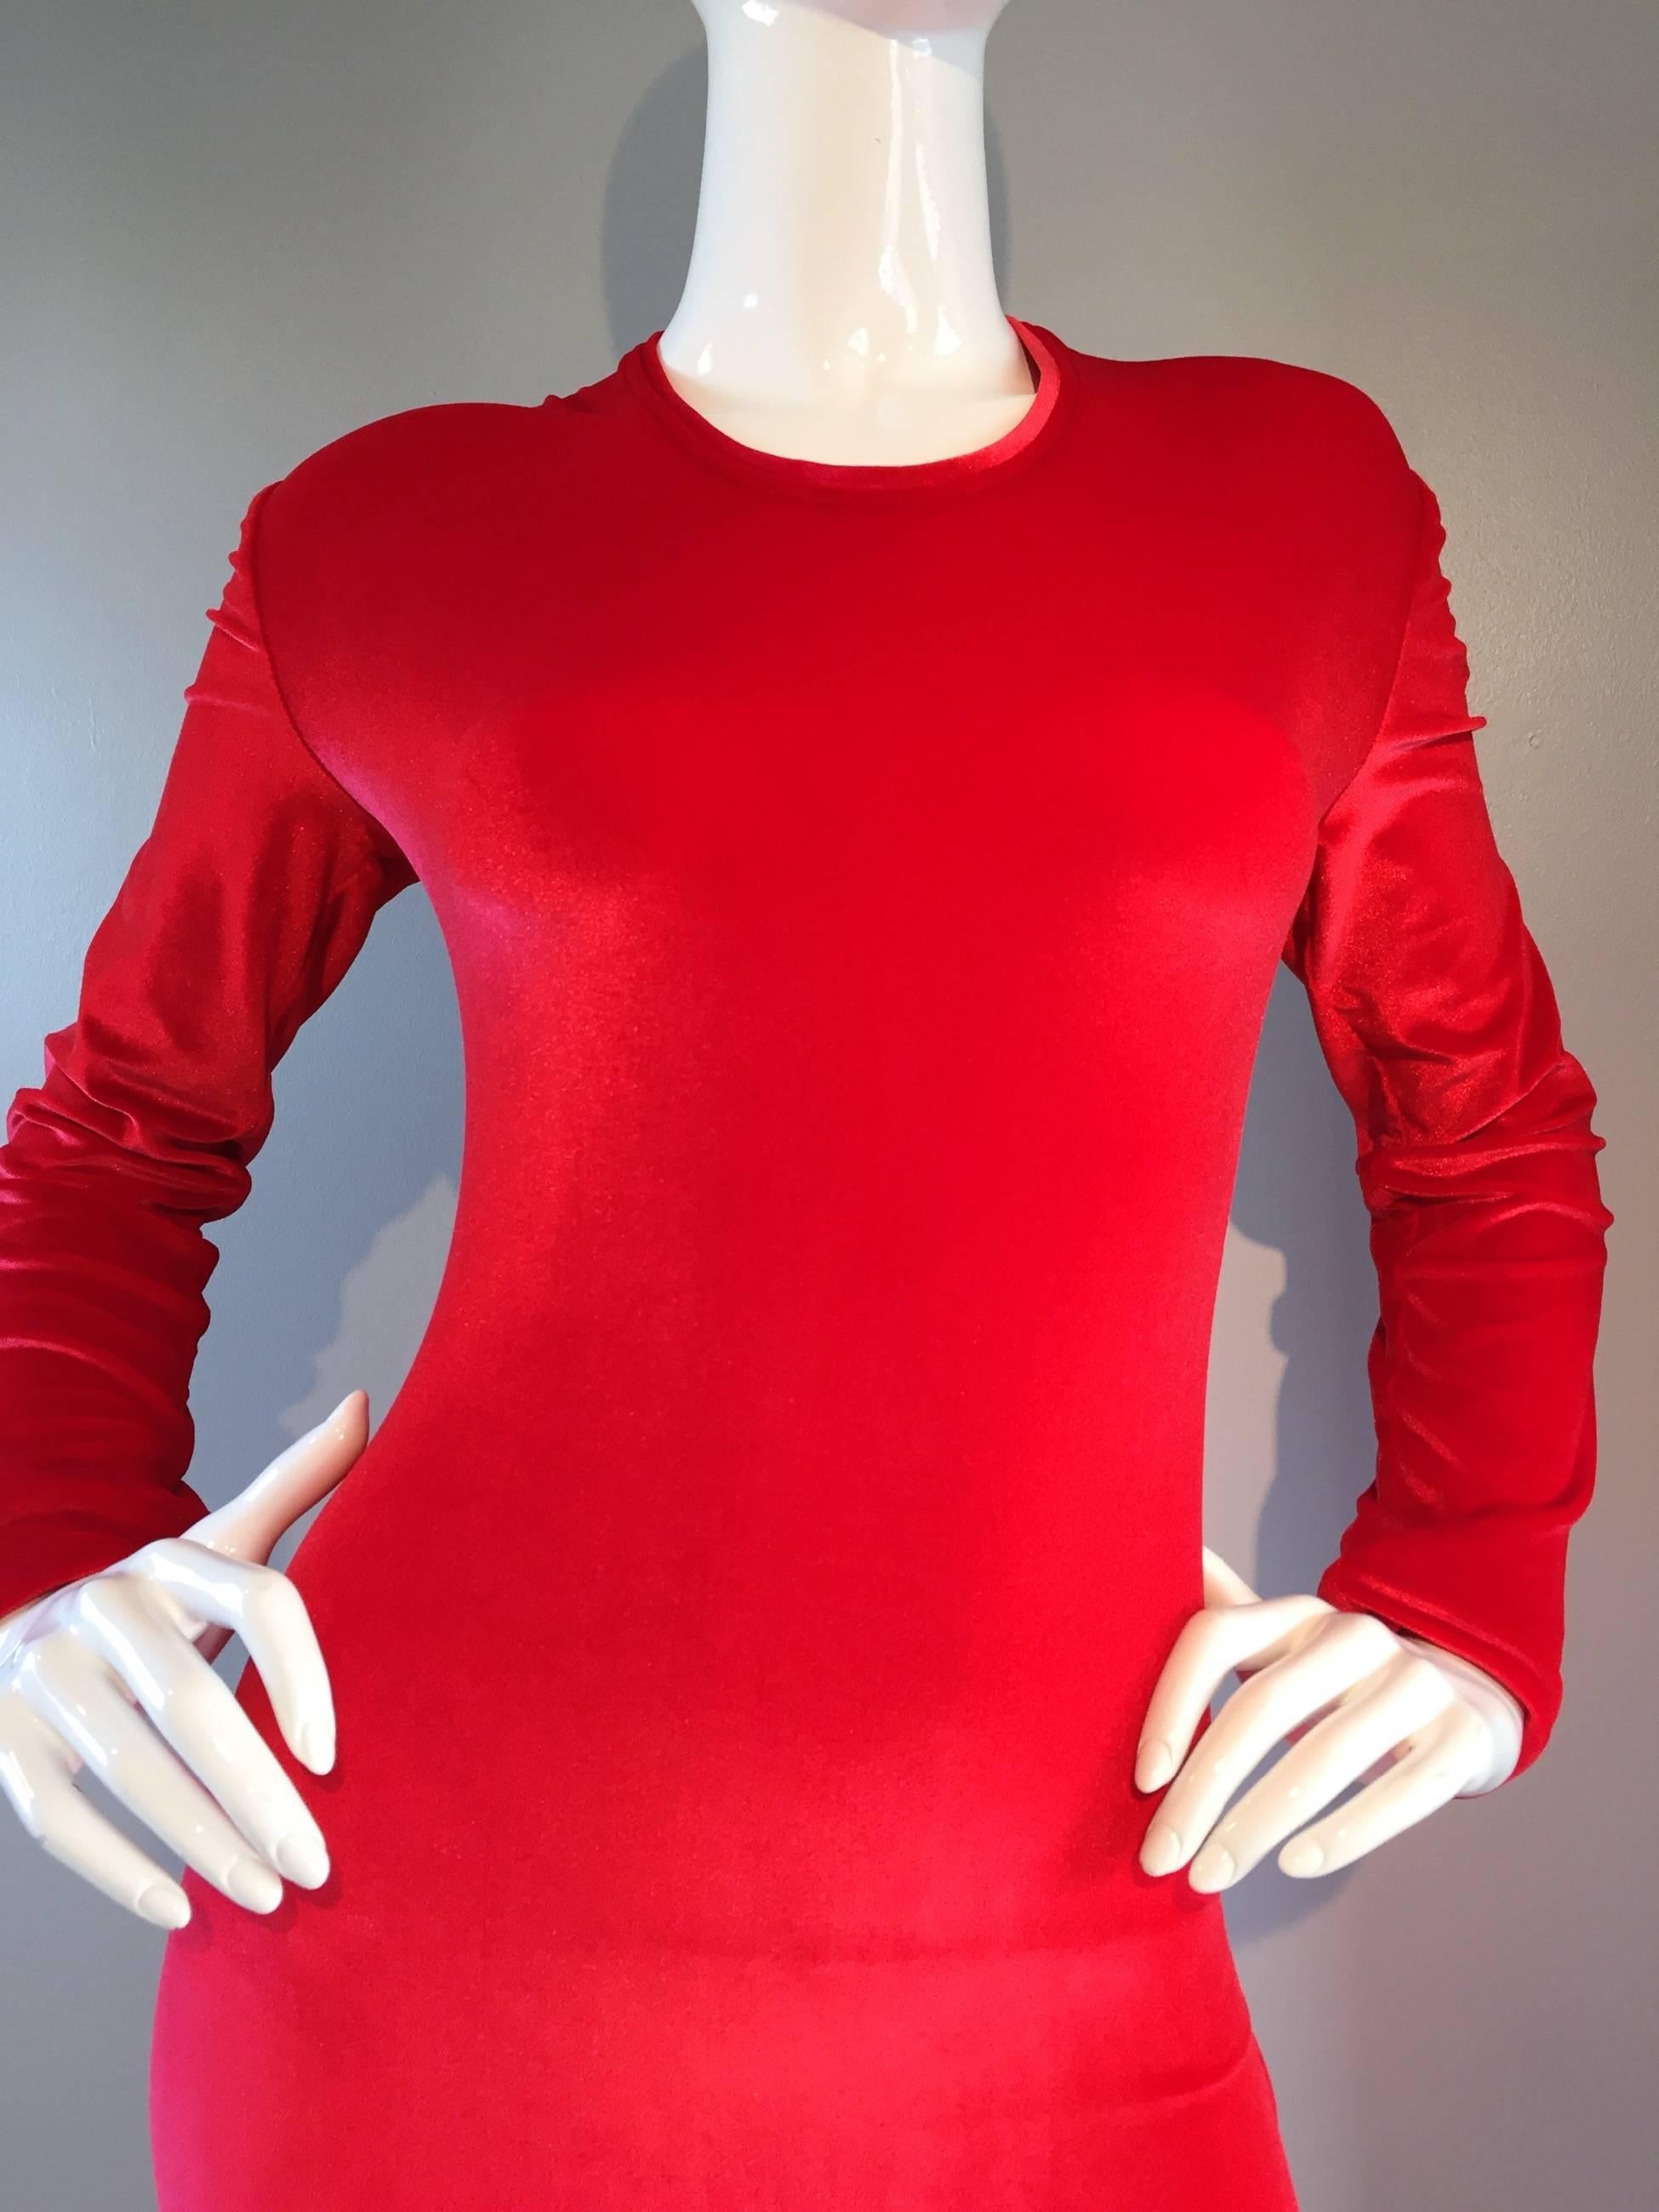 Women's Extraordinary Patrick Kelly 1980s Vintage Red BodCon Mermaid Dress w/ Tulle Hem For Sale